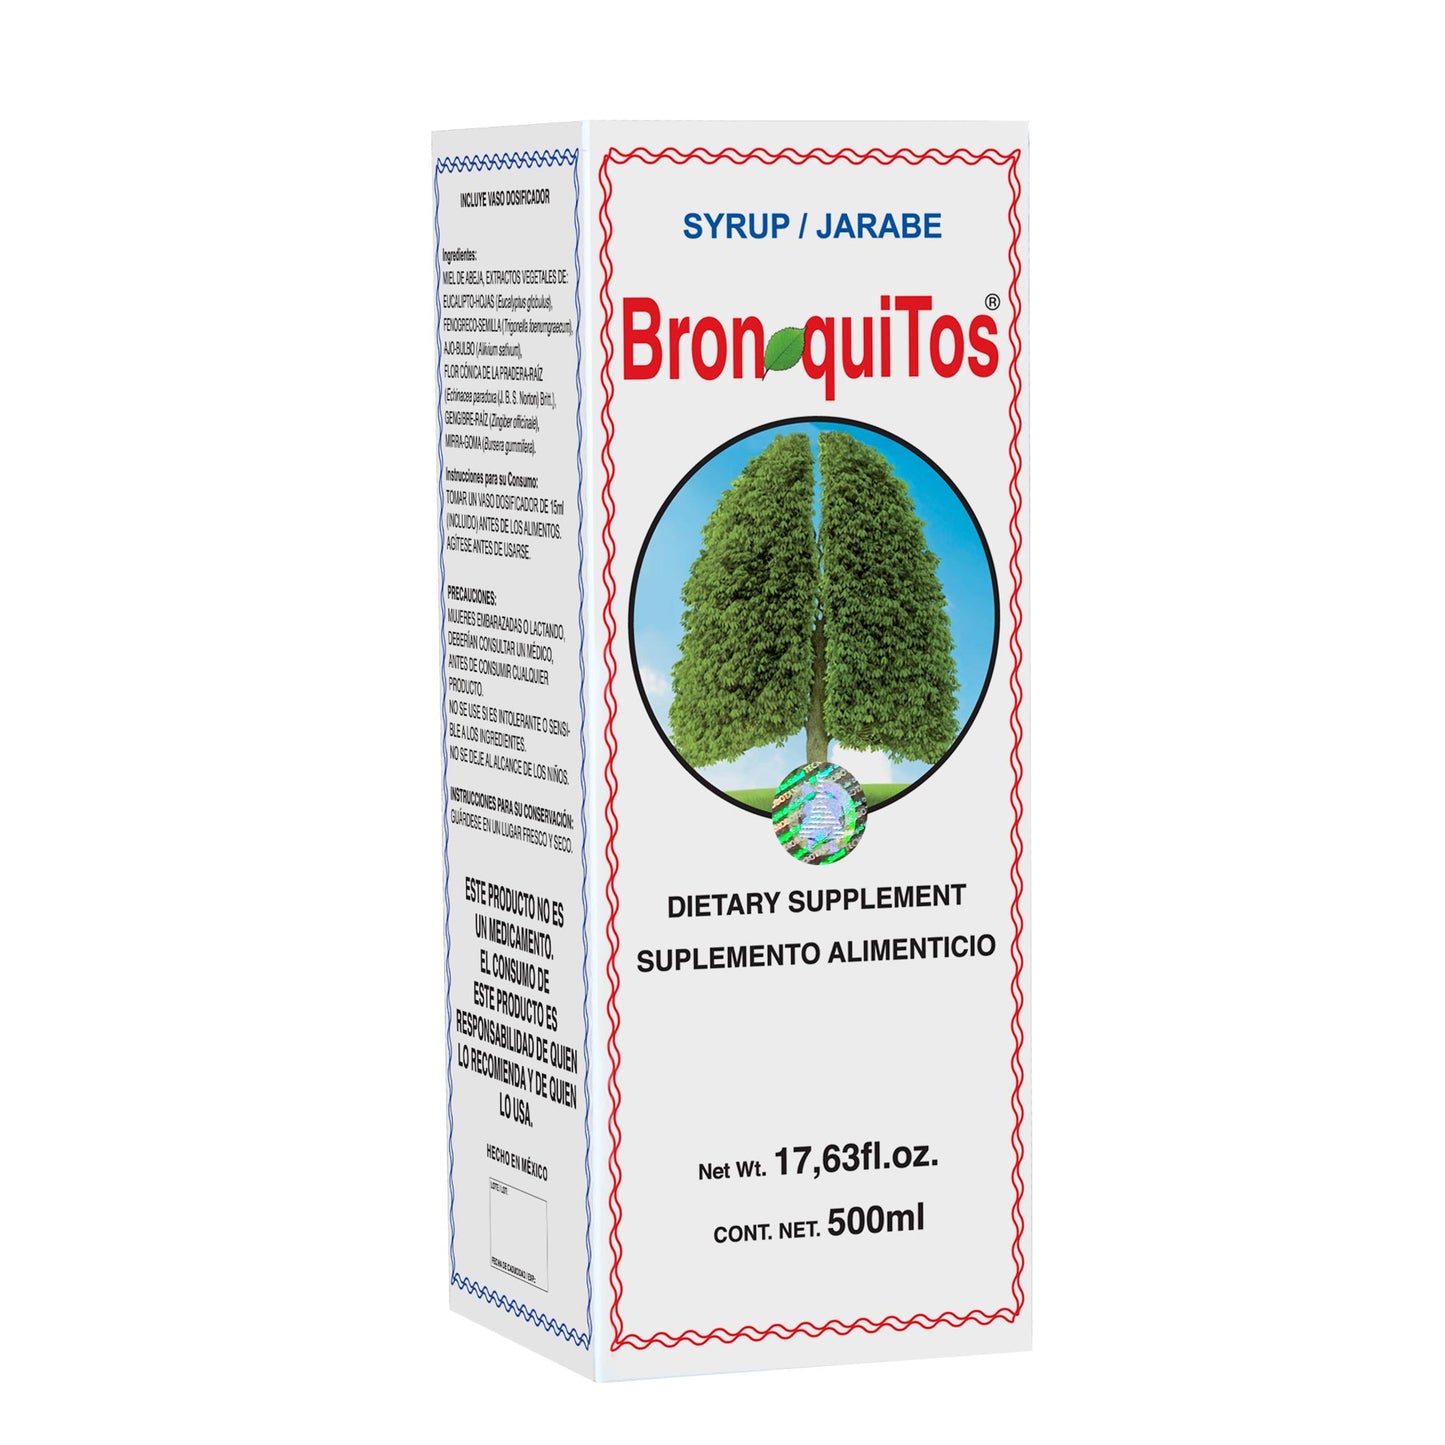 BRONQUITOS ® jarabe 500ml